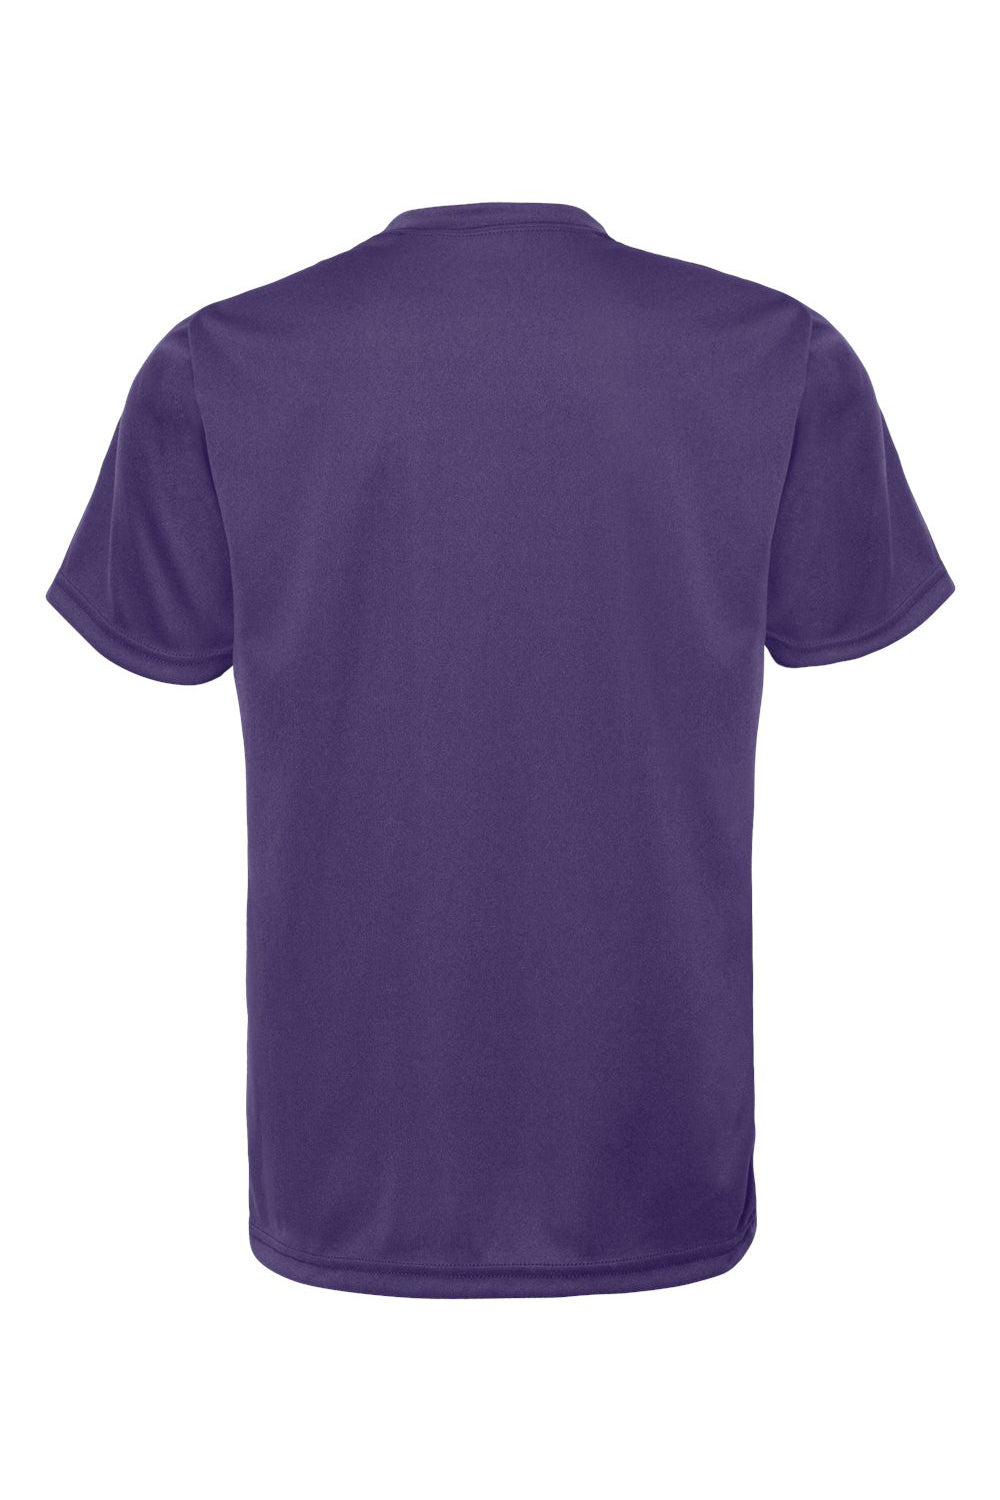 C2 Sport 5200 Youth Performance Moisture Wicking Short Sleeve Crewneck T-Shirt Purple Flat Back